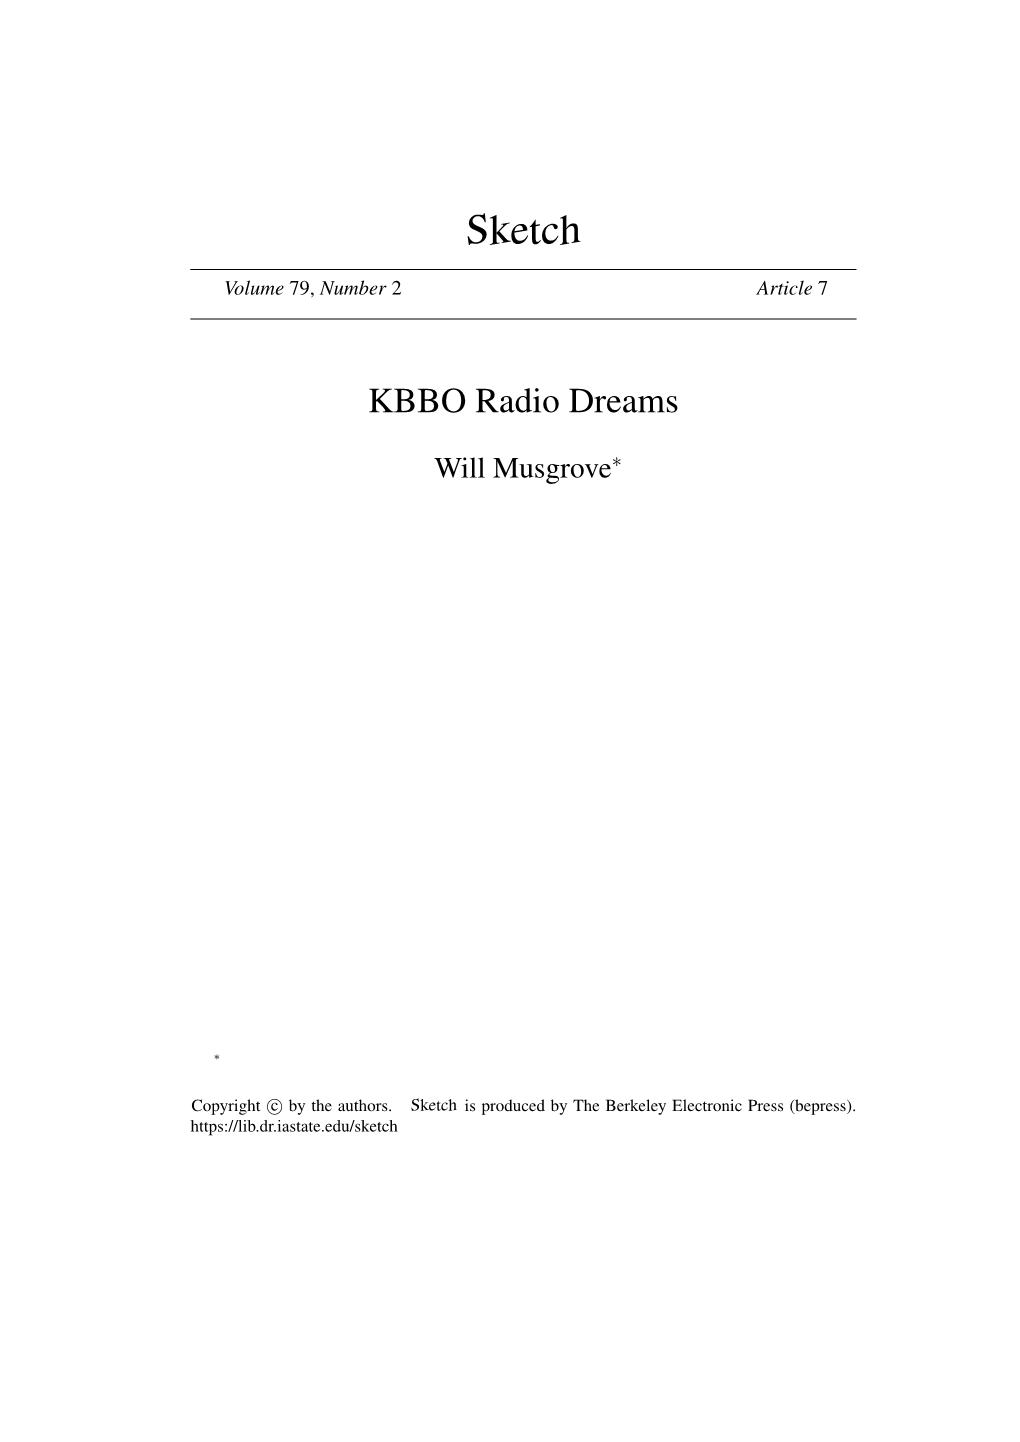 KBBO Radio Dreams